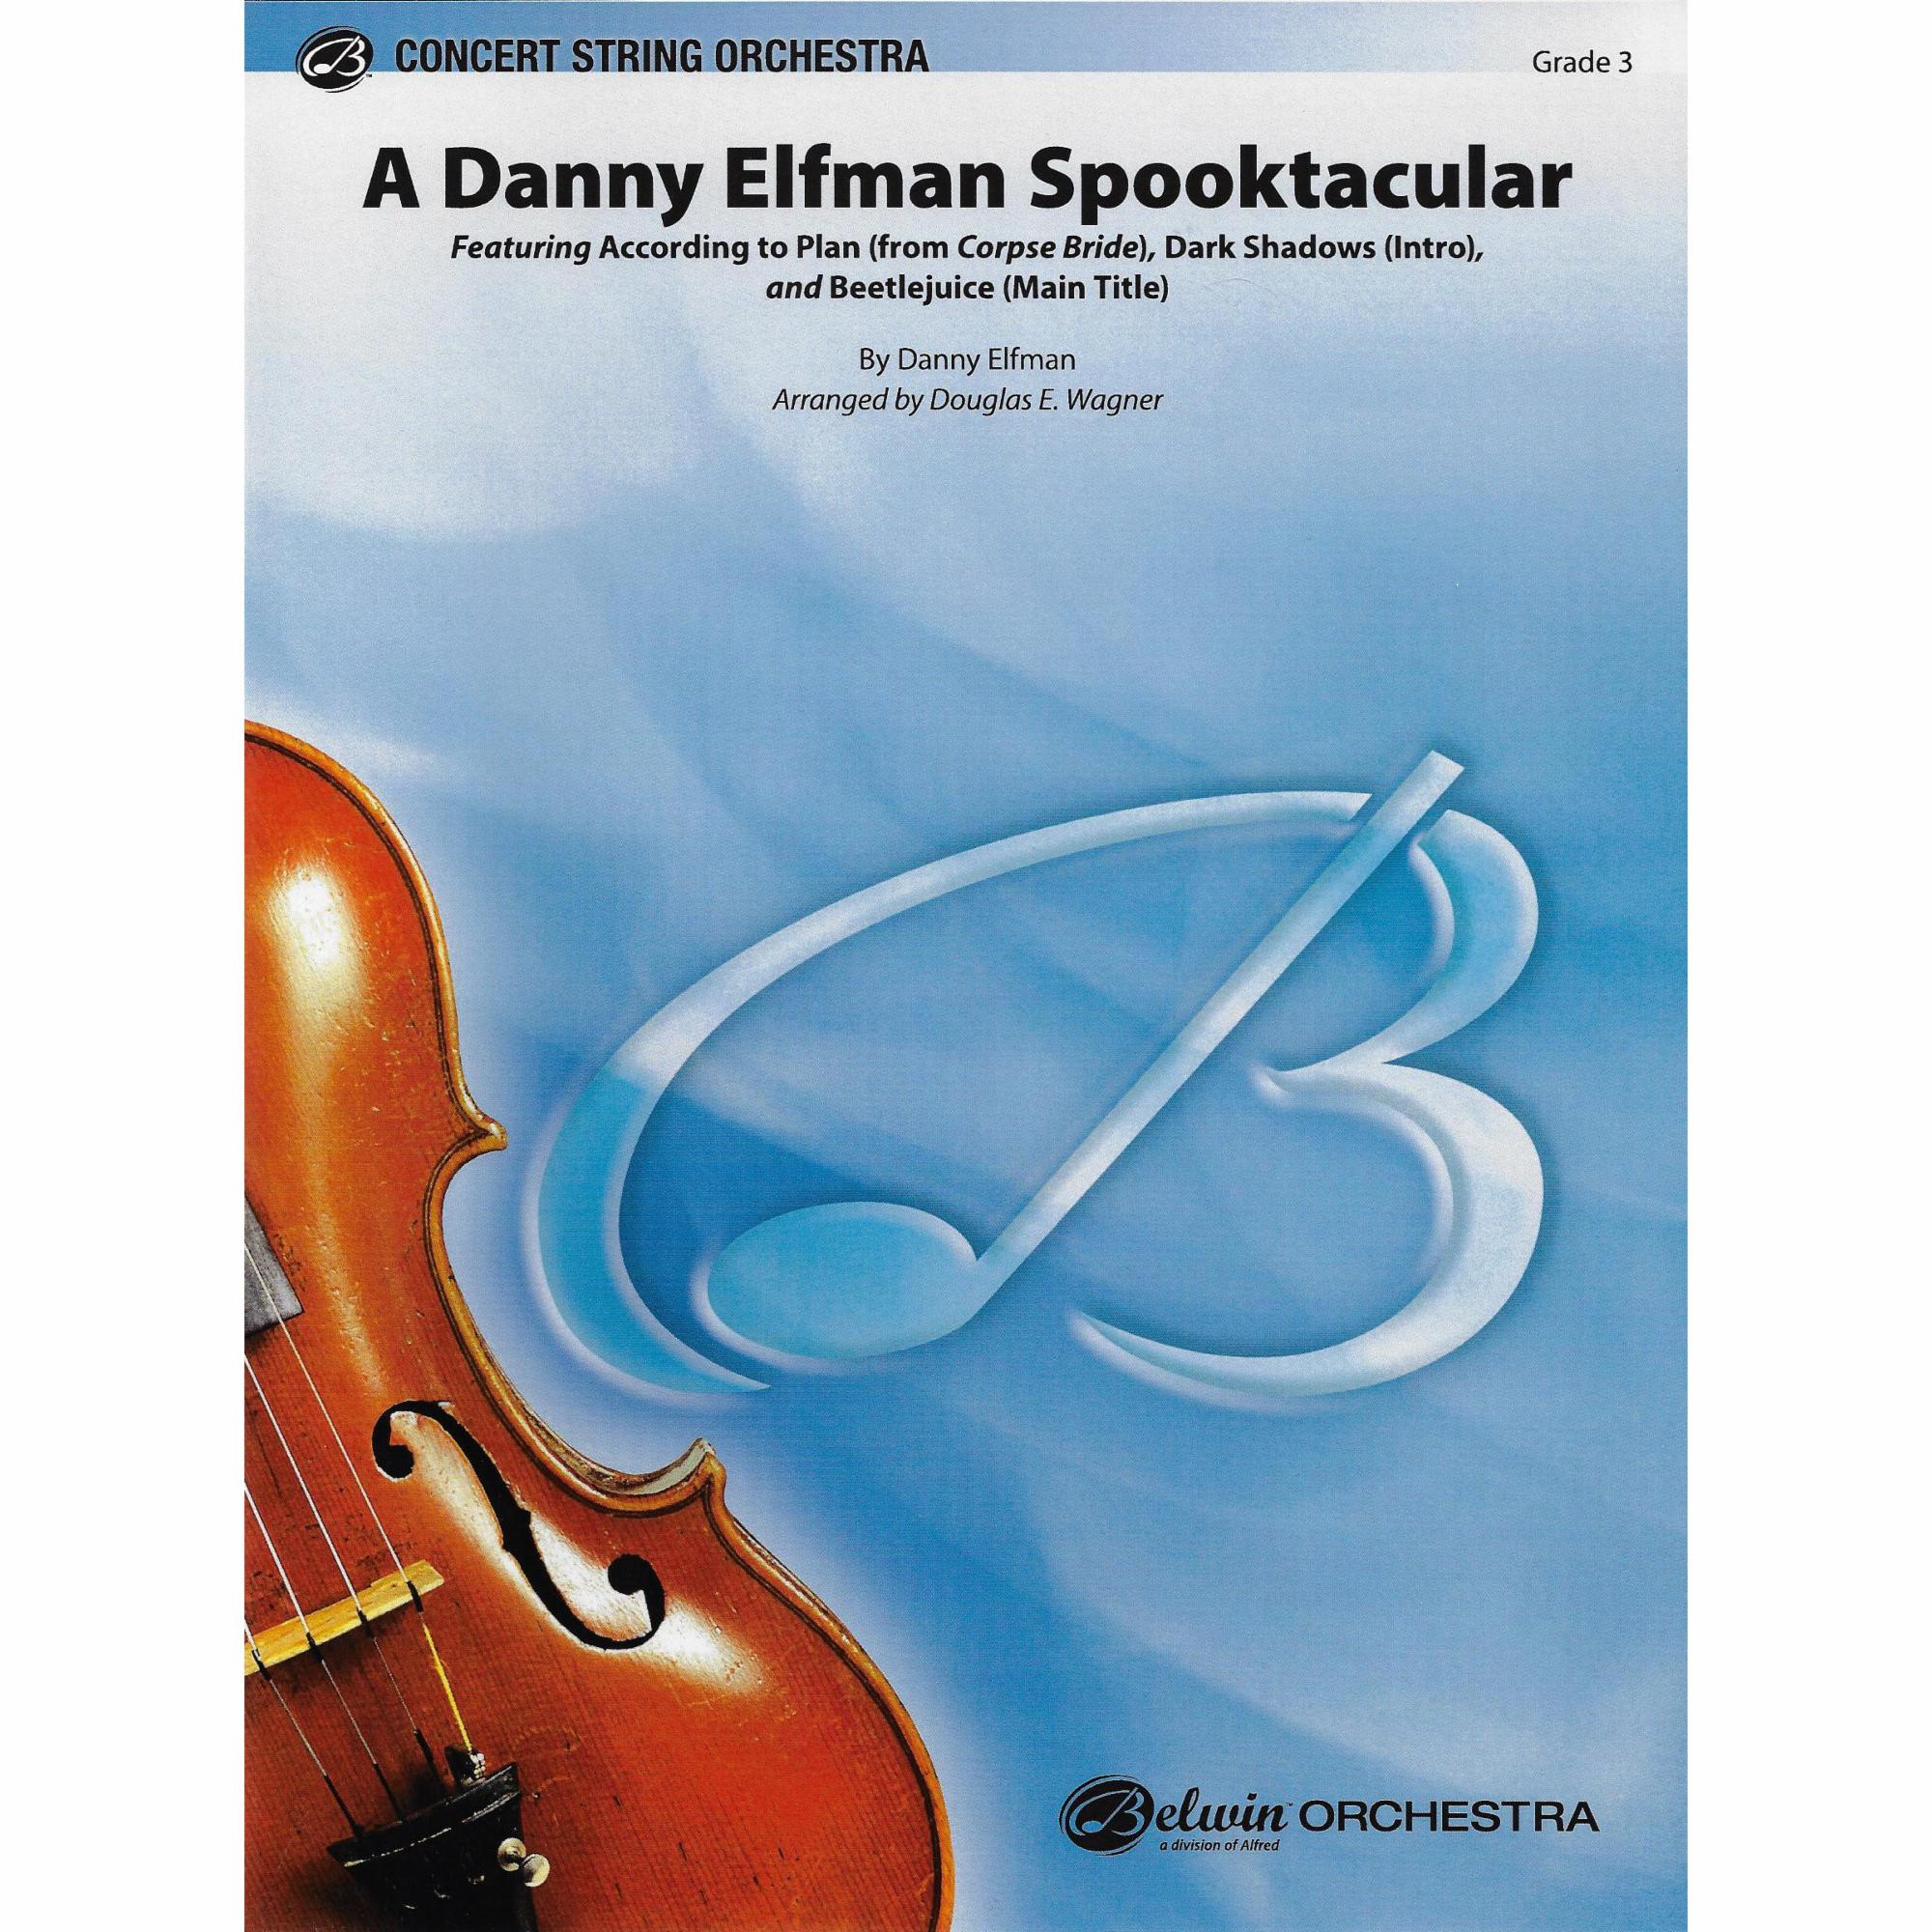 A Danny Elfman Spooktacular for String Orchestra